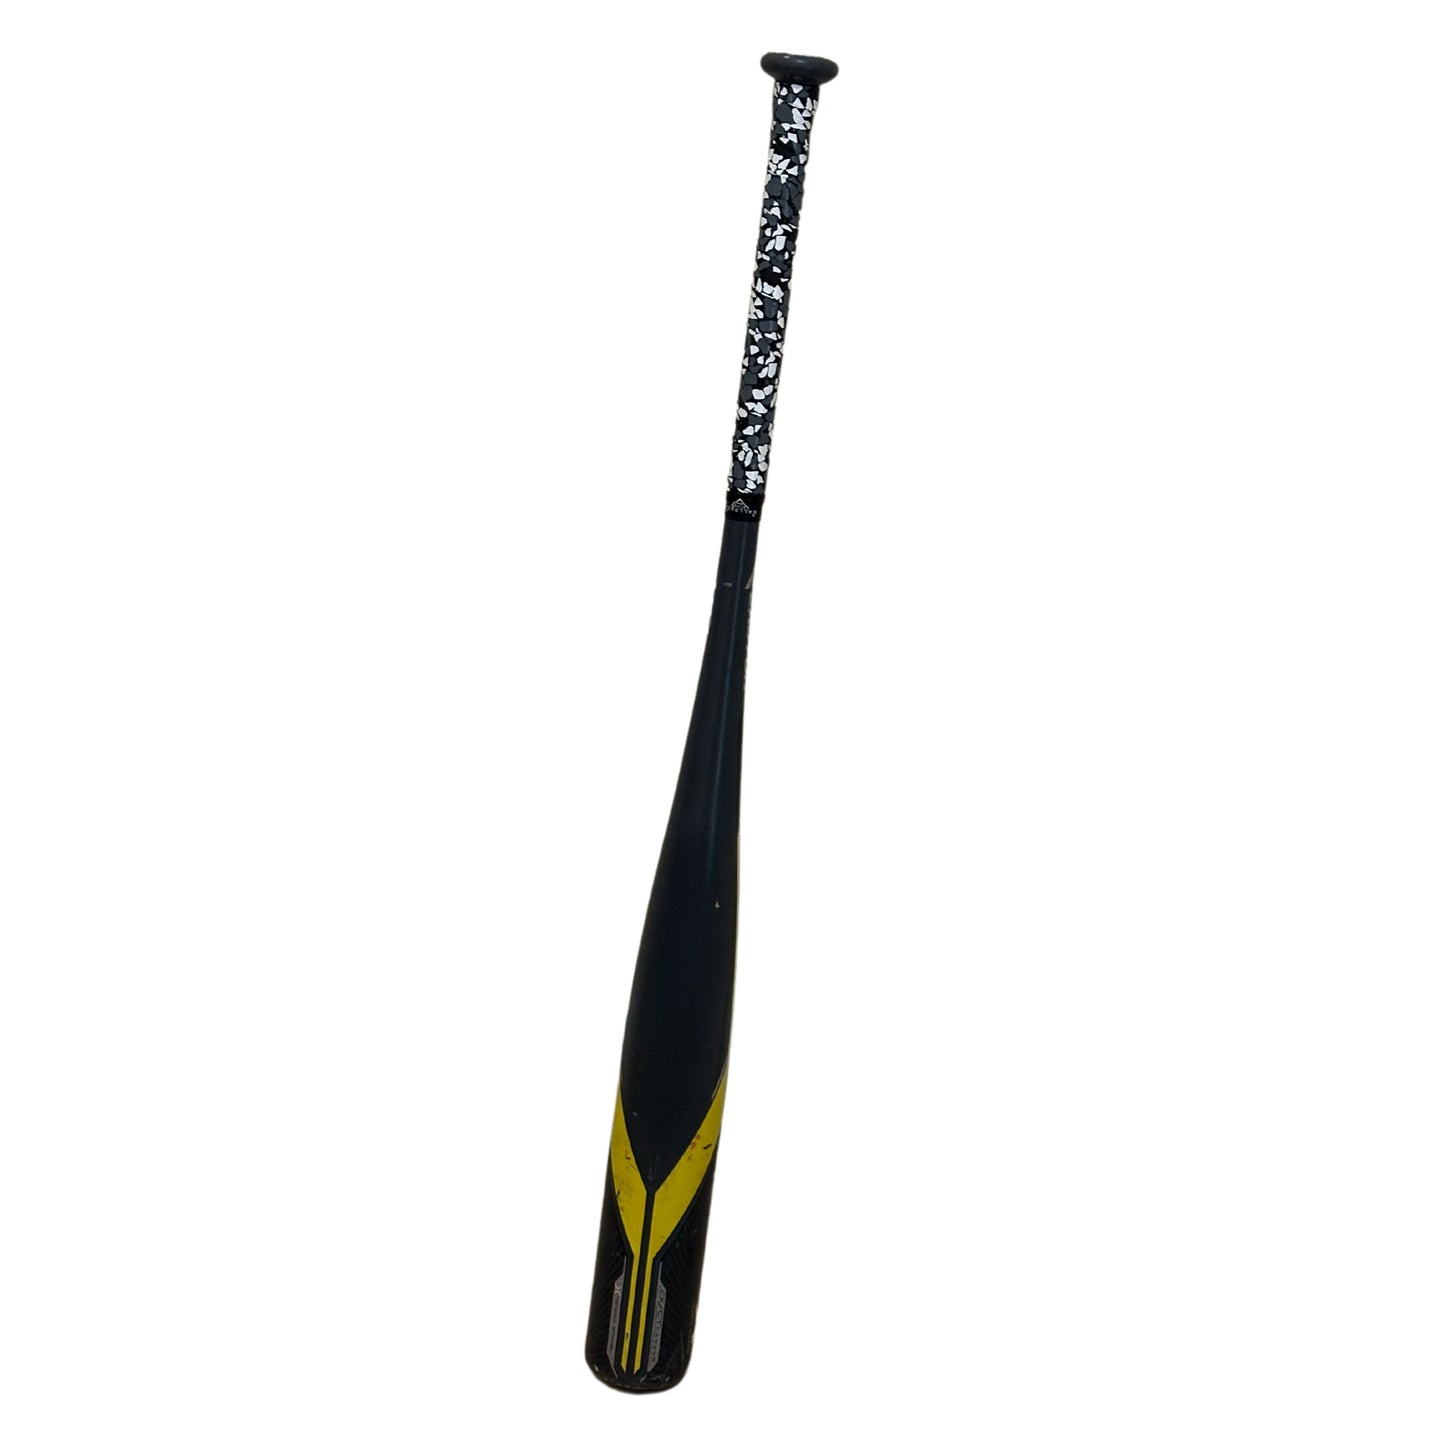 Ballpark Elite Bat Grip Tape for Baseball/Softball | 1.10 MM Precut Baseball Bat Grip Replacement | Black, US Flag, Camo, Stitch Grip Tapes